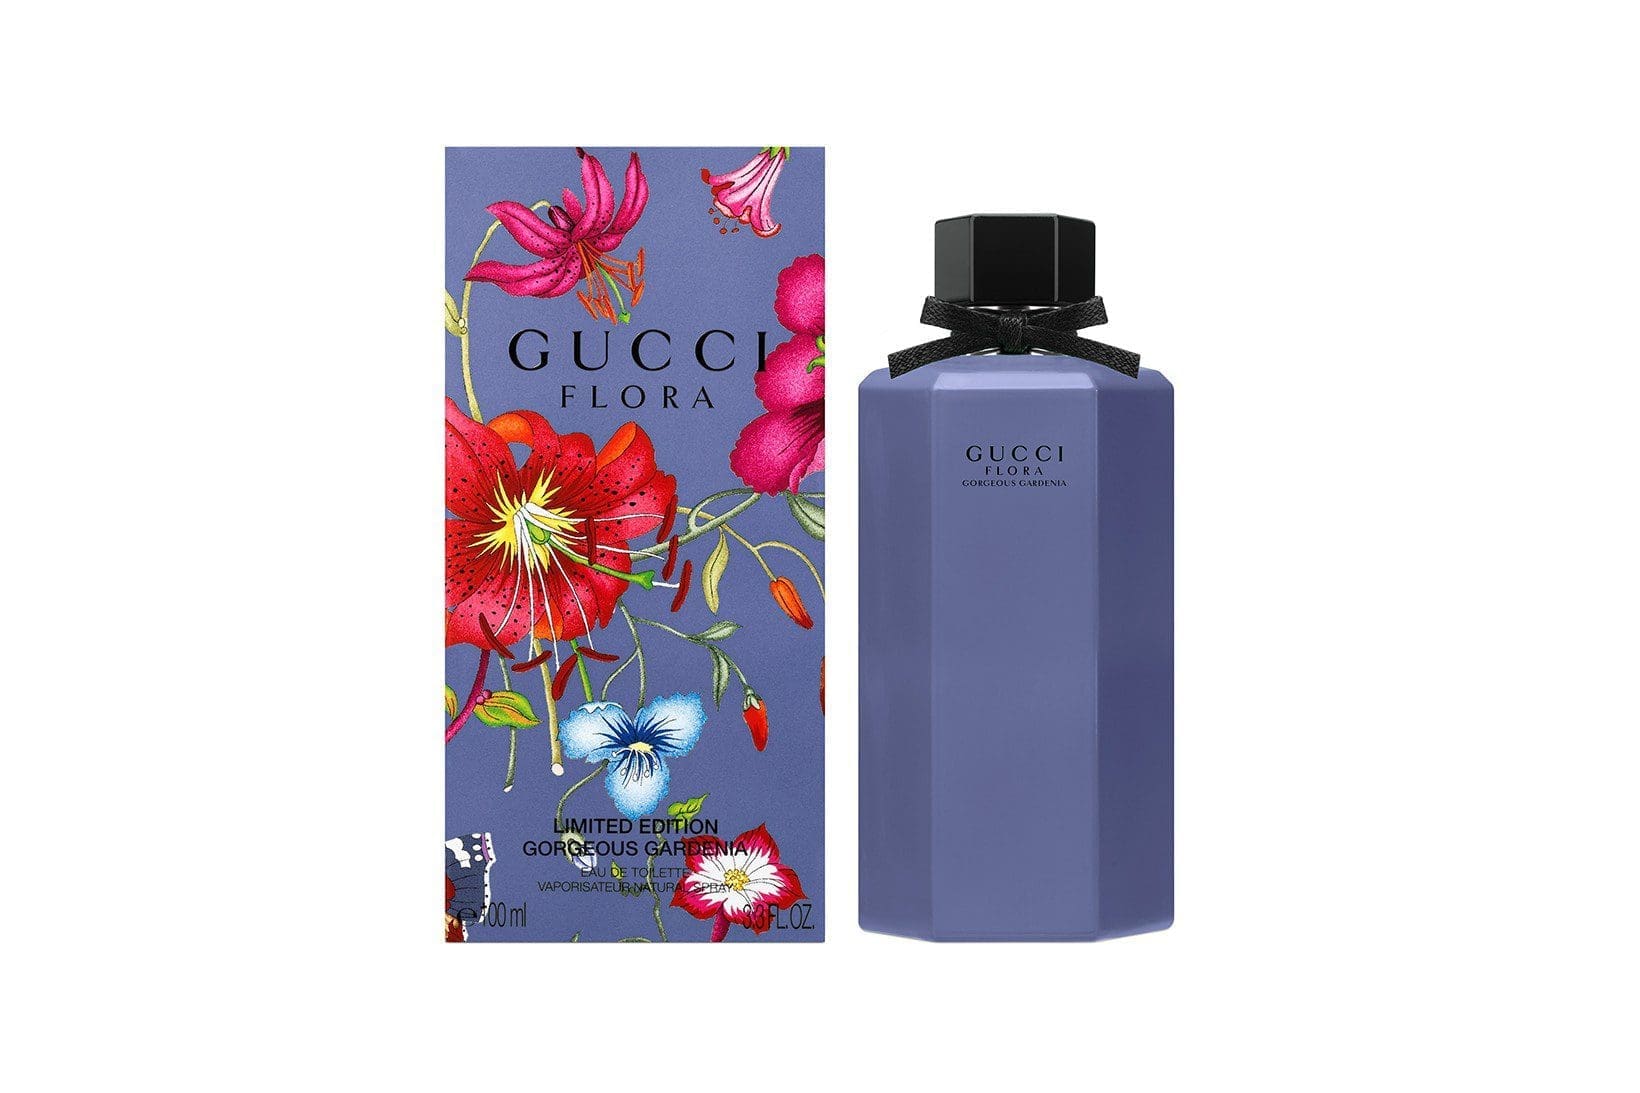 3170 Flora Gorgeous Gardenia Limited Edition Gucci edt 100 ml